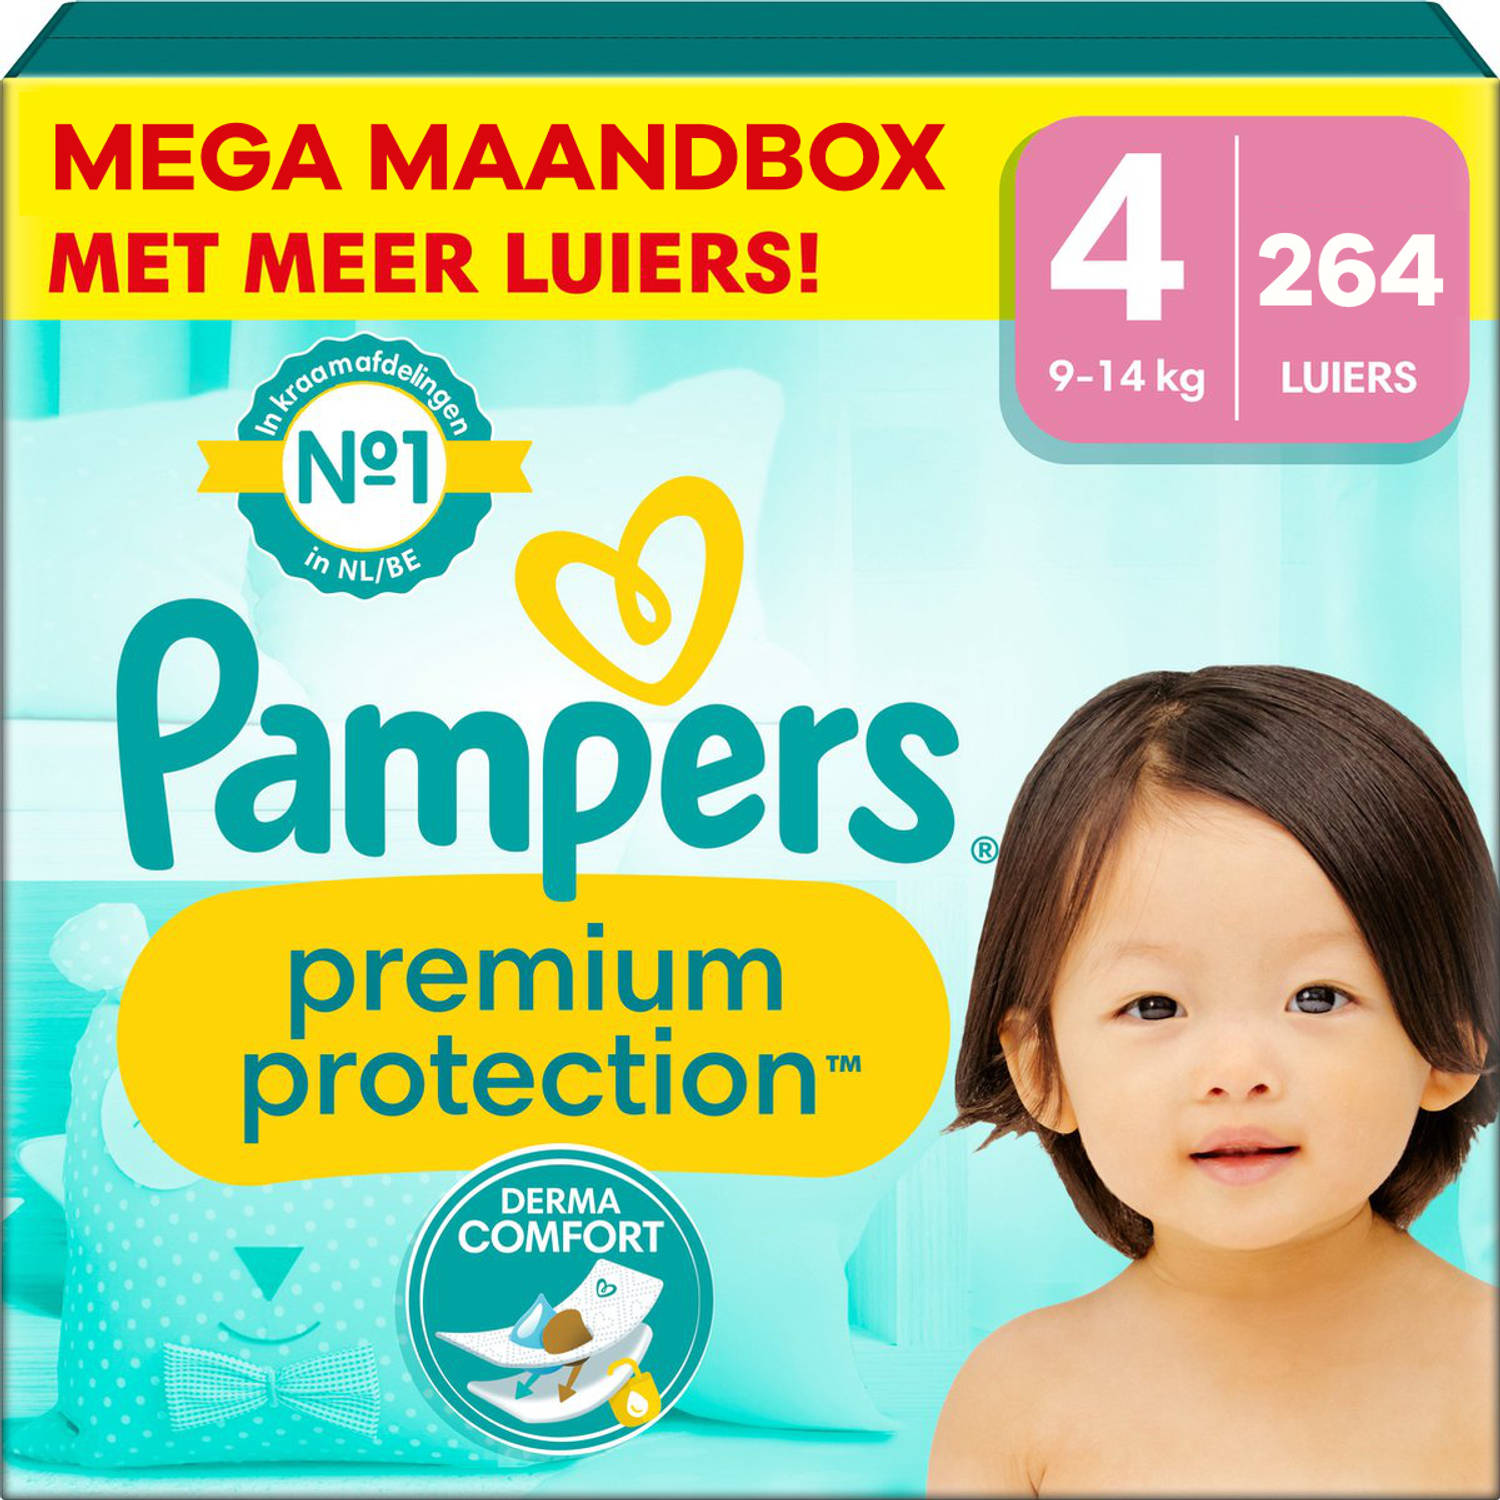 Pampers - Premium Protection - Maat 4 - Mega Maandbox - 264 stuks - 9/14 KG